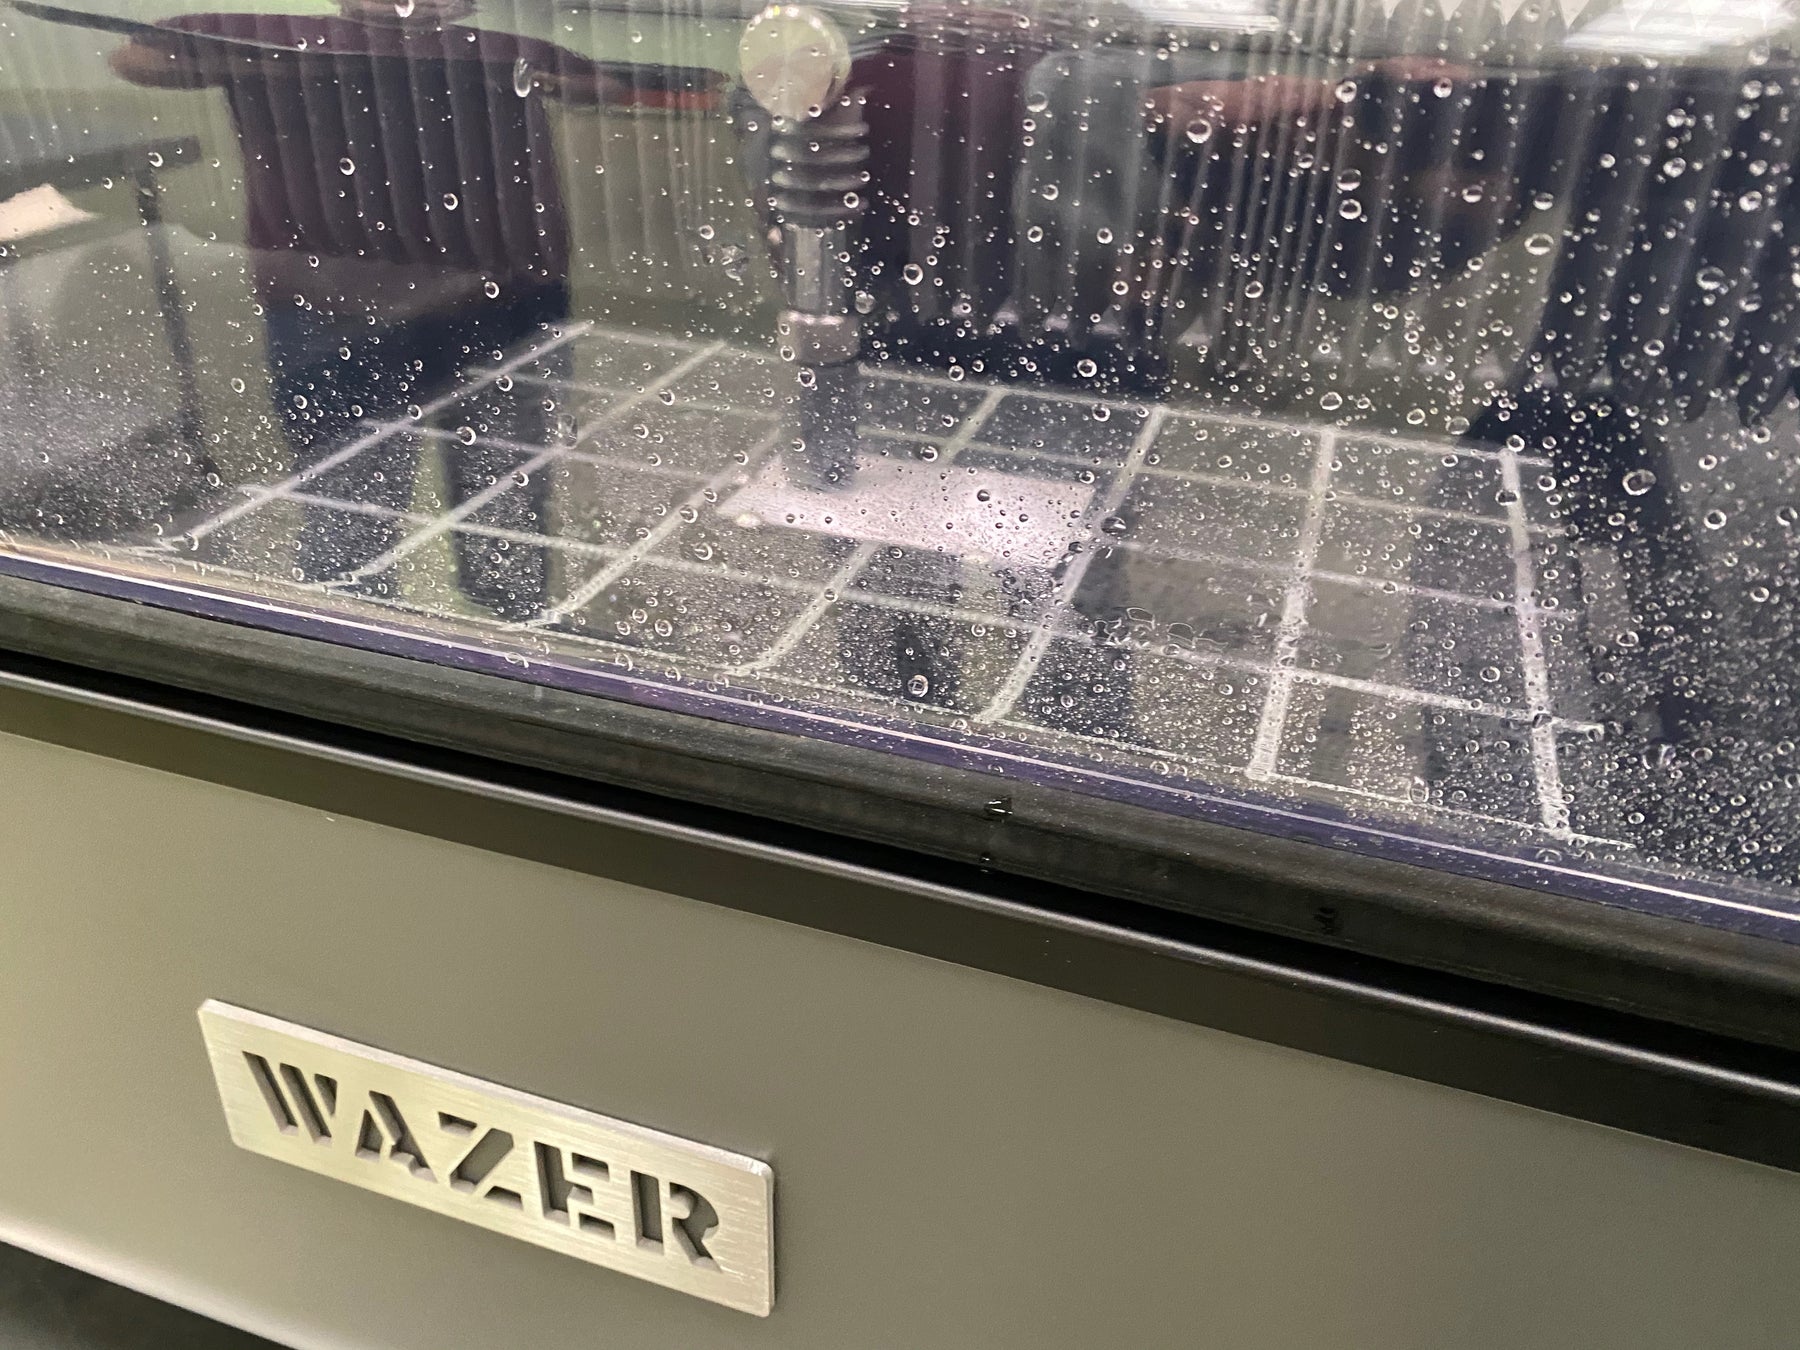 Water Cutting with Wazer